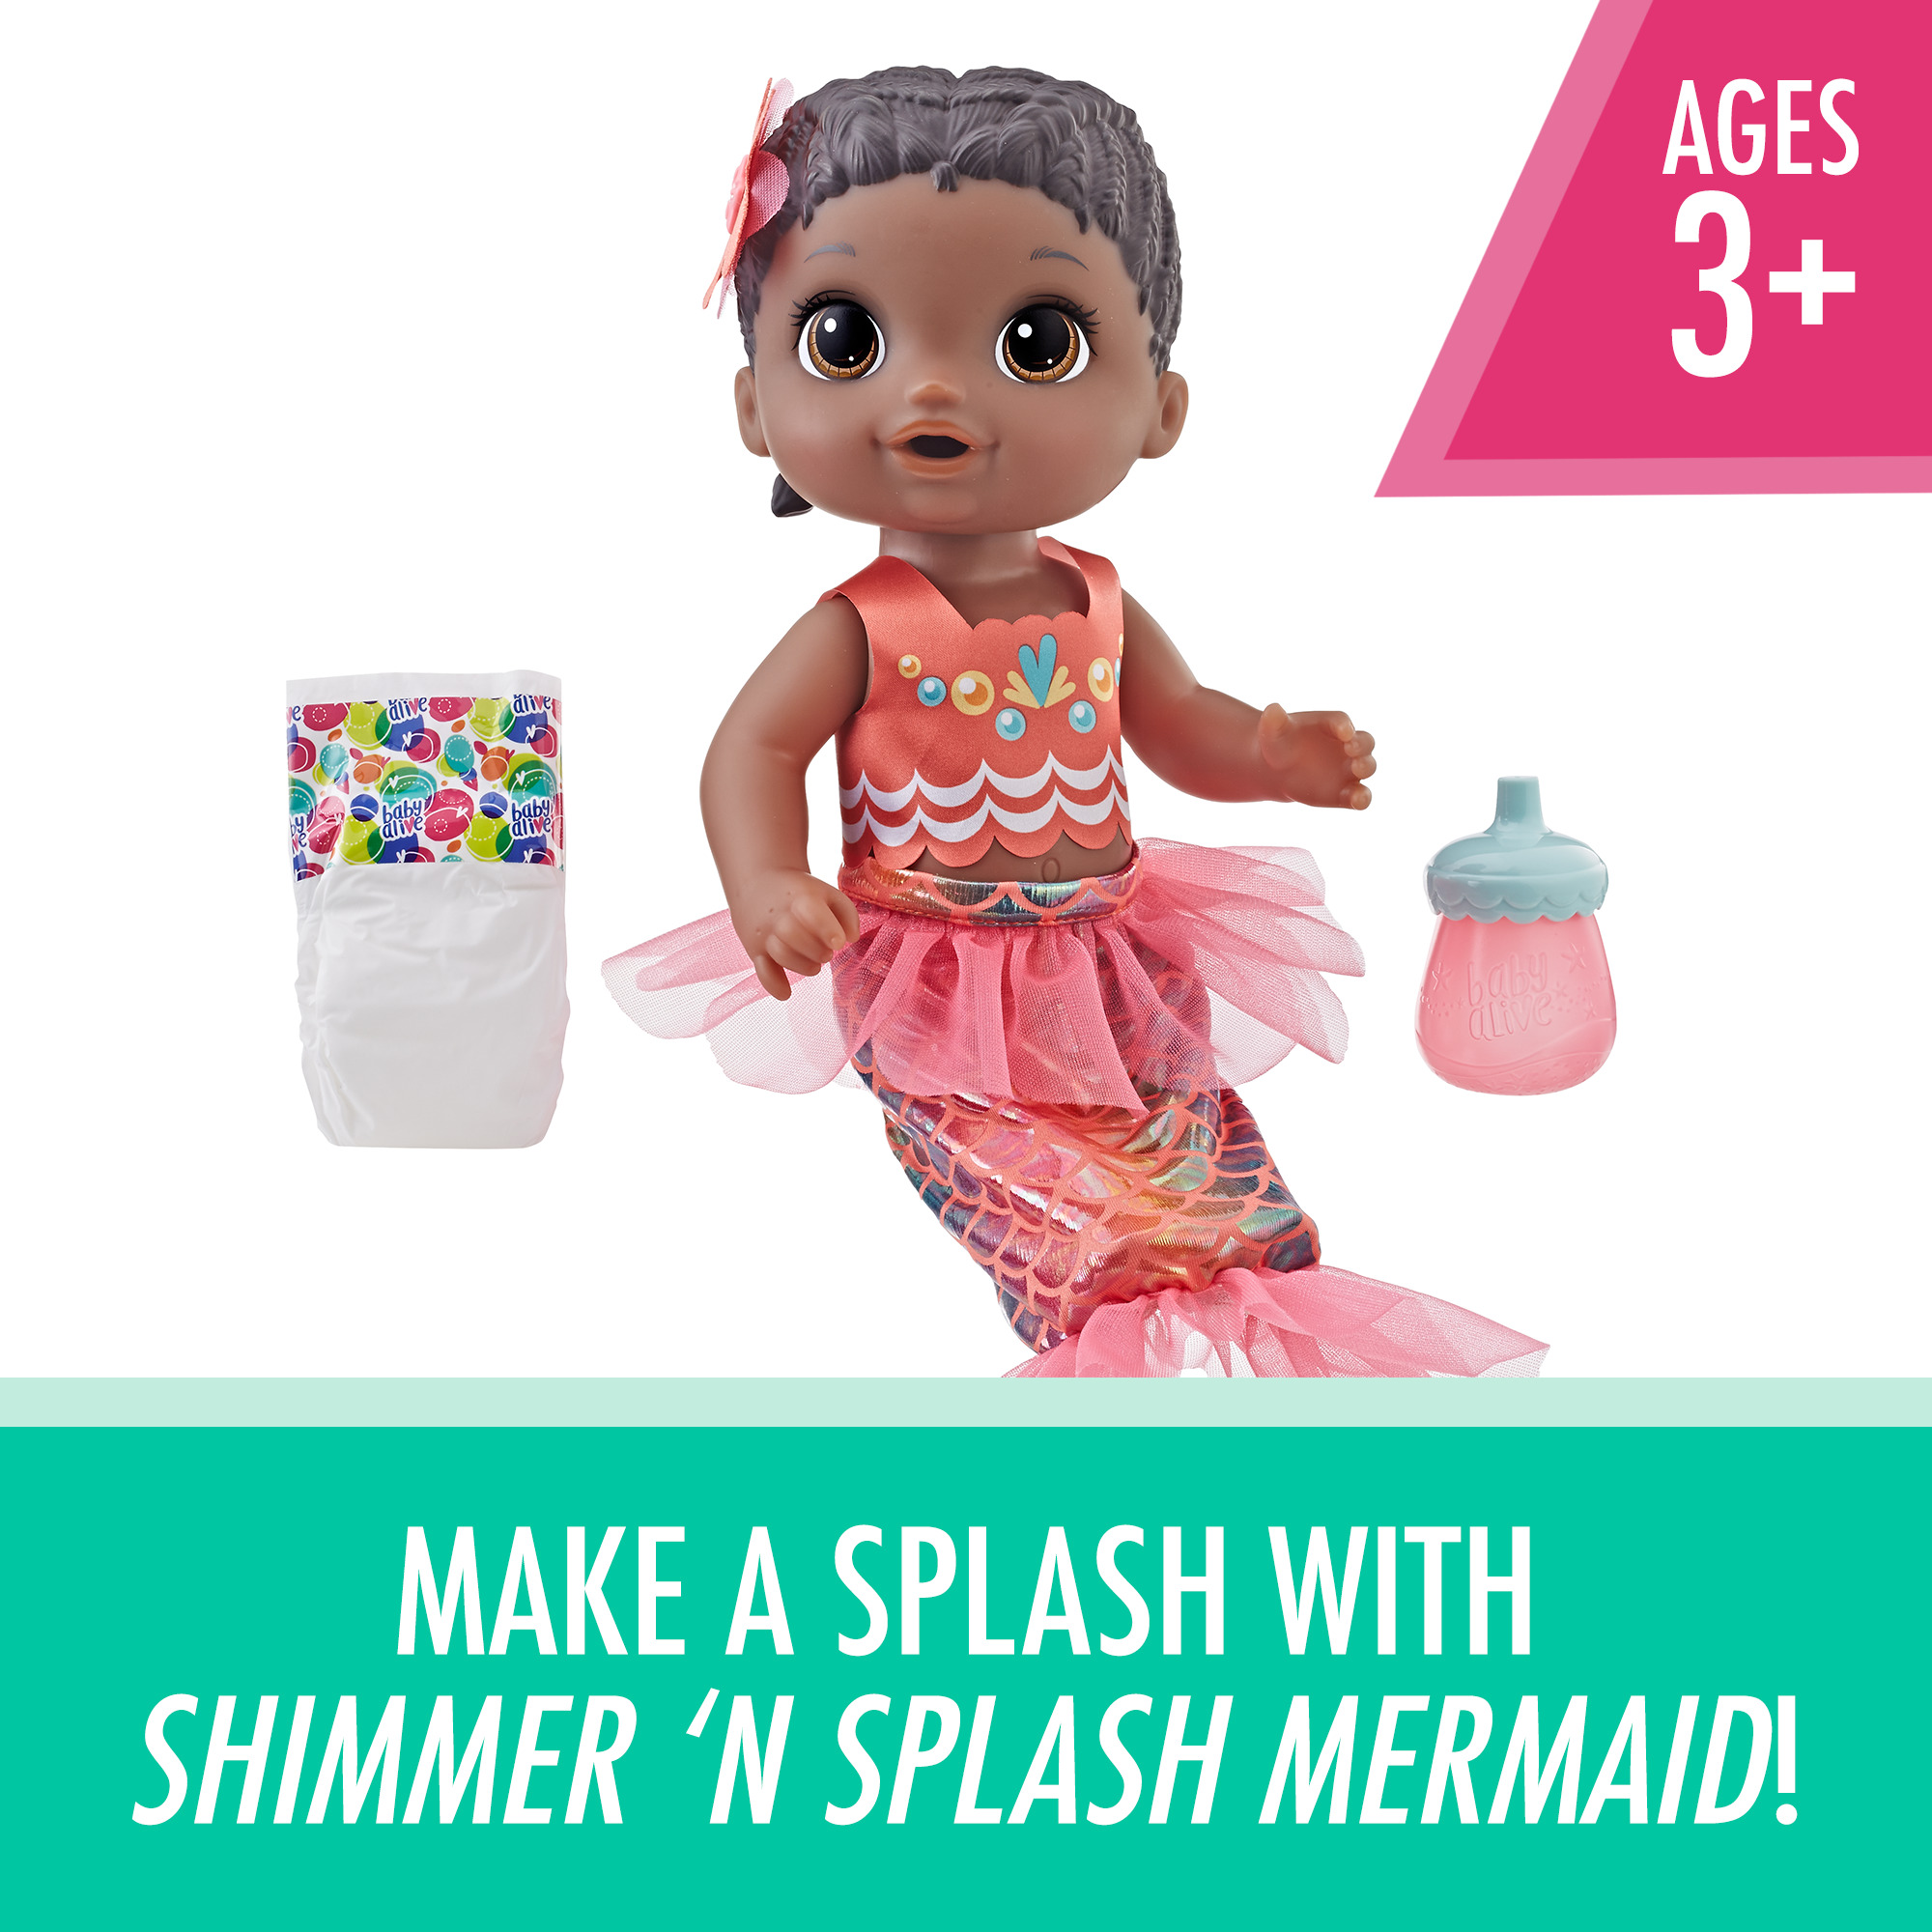 Baby Alive: Shimmer 'n Splash Mermaid 14-Inch Doll Black Hair, Brown Eyes Kids Toy for Boys and Girls - image 5 of 14